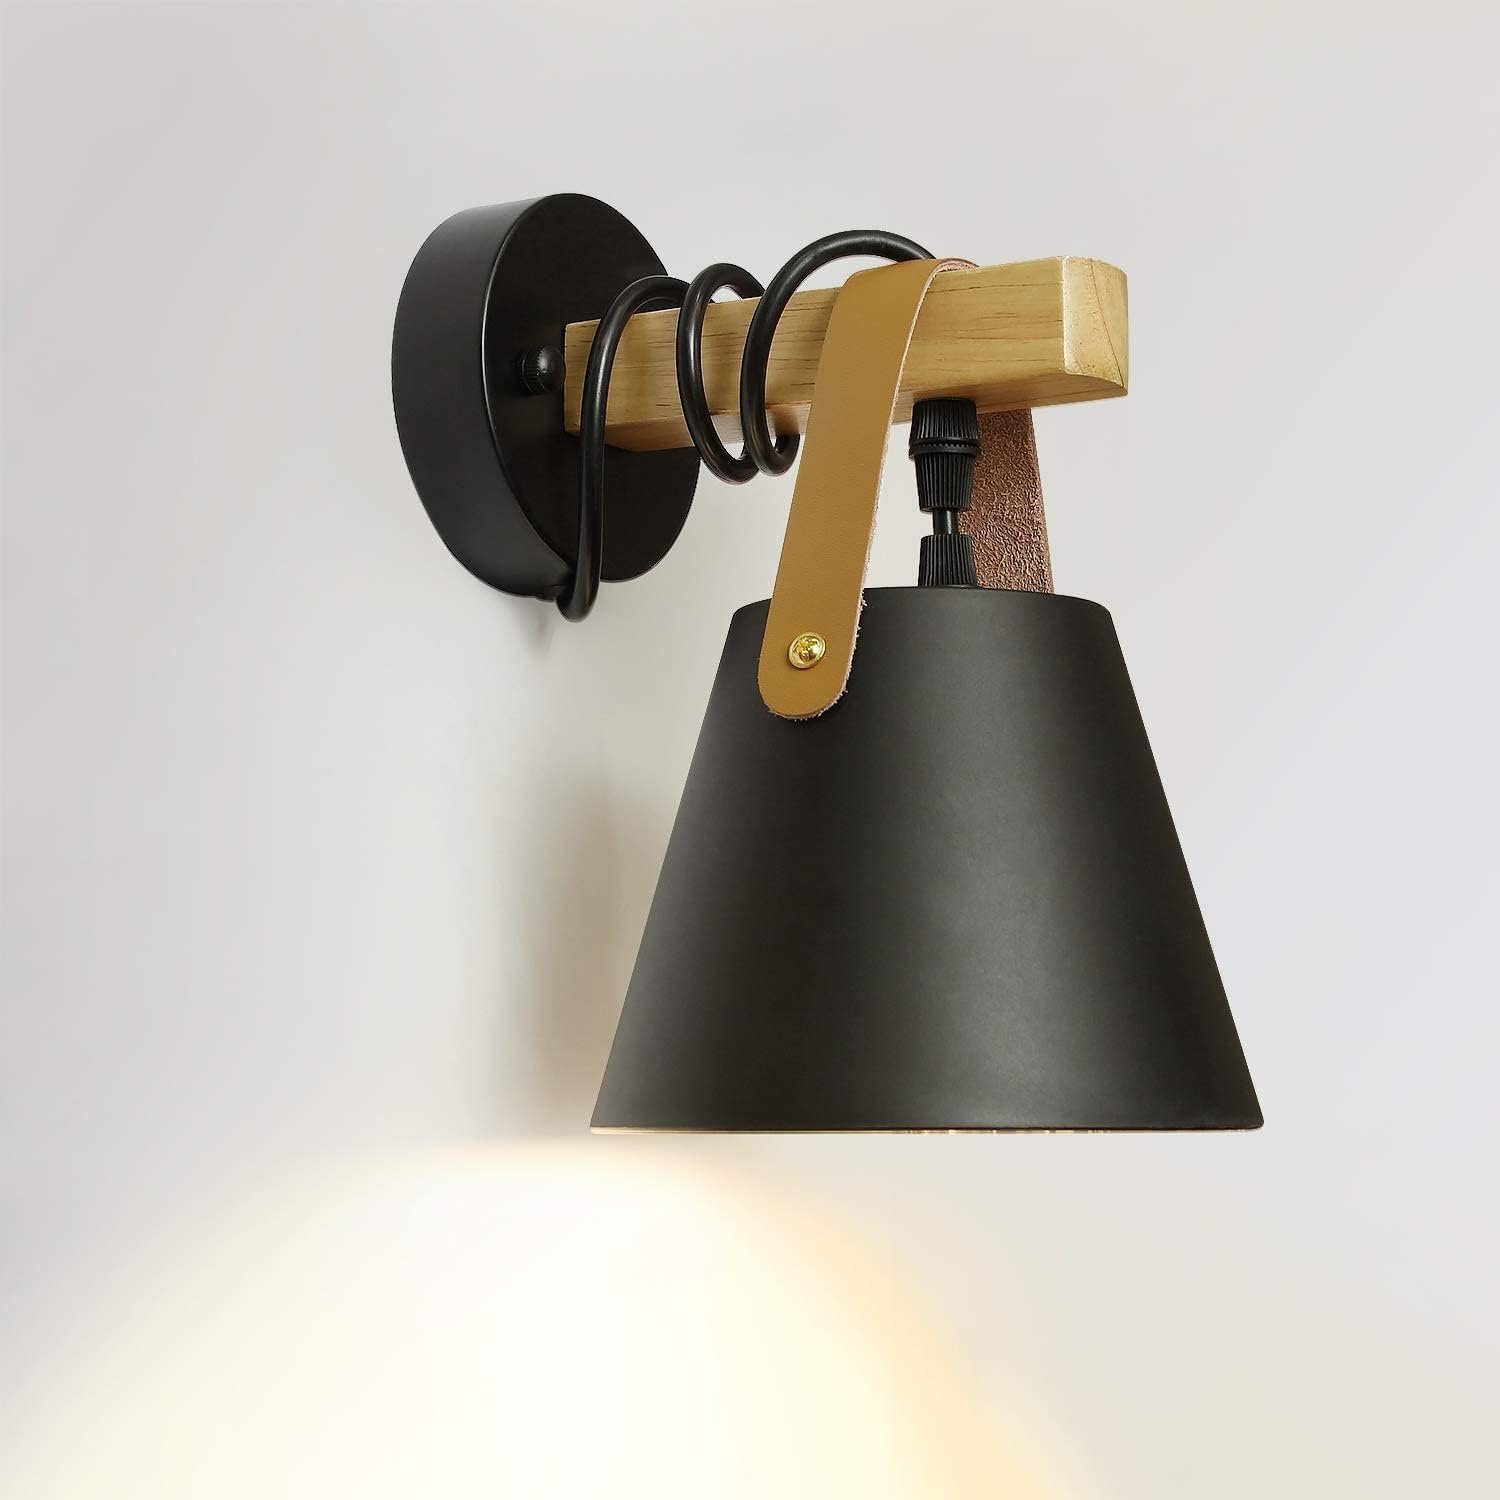 Nettlife Wandleuchte Schwarz Holz Vintage E27 Wandlampe Industrial innen Wandbeleuchtung, LED wechselbar, für Wohnzimmer Schlafzimmer Küche Esszimmer Flur Treppenhaus Cafes